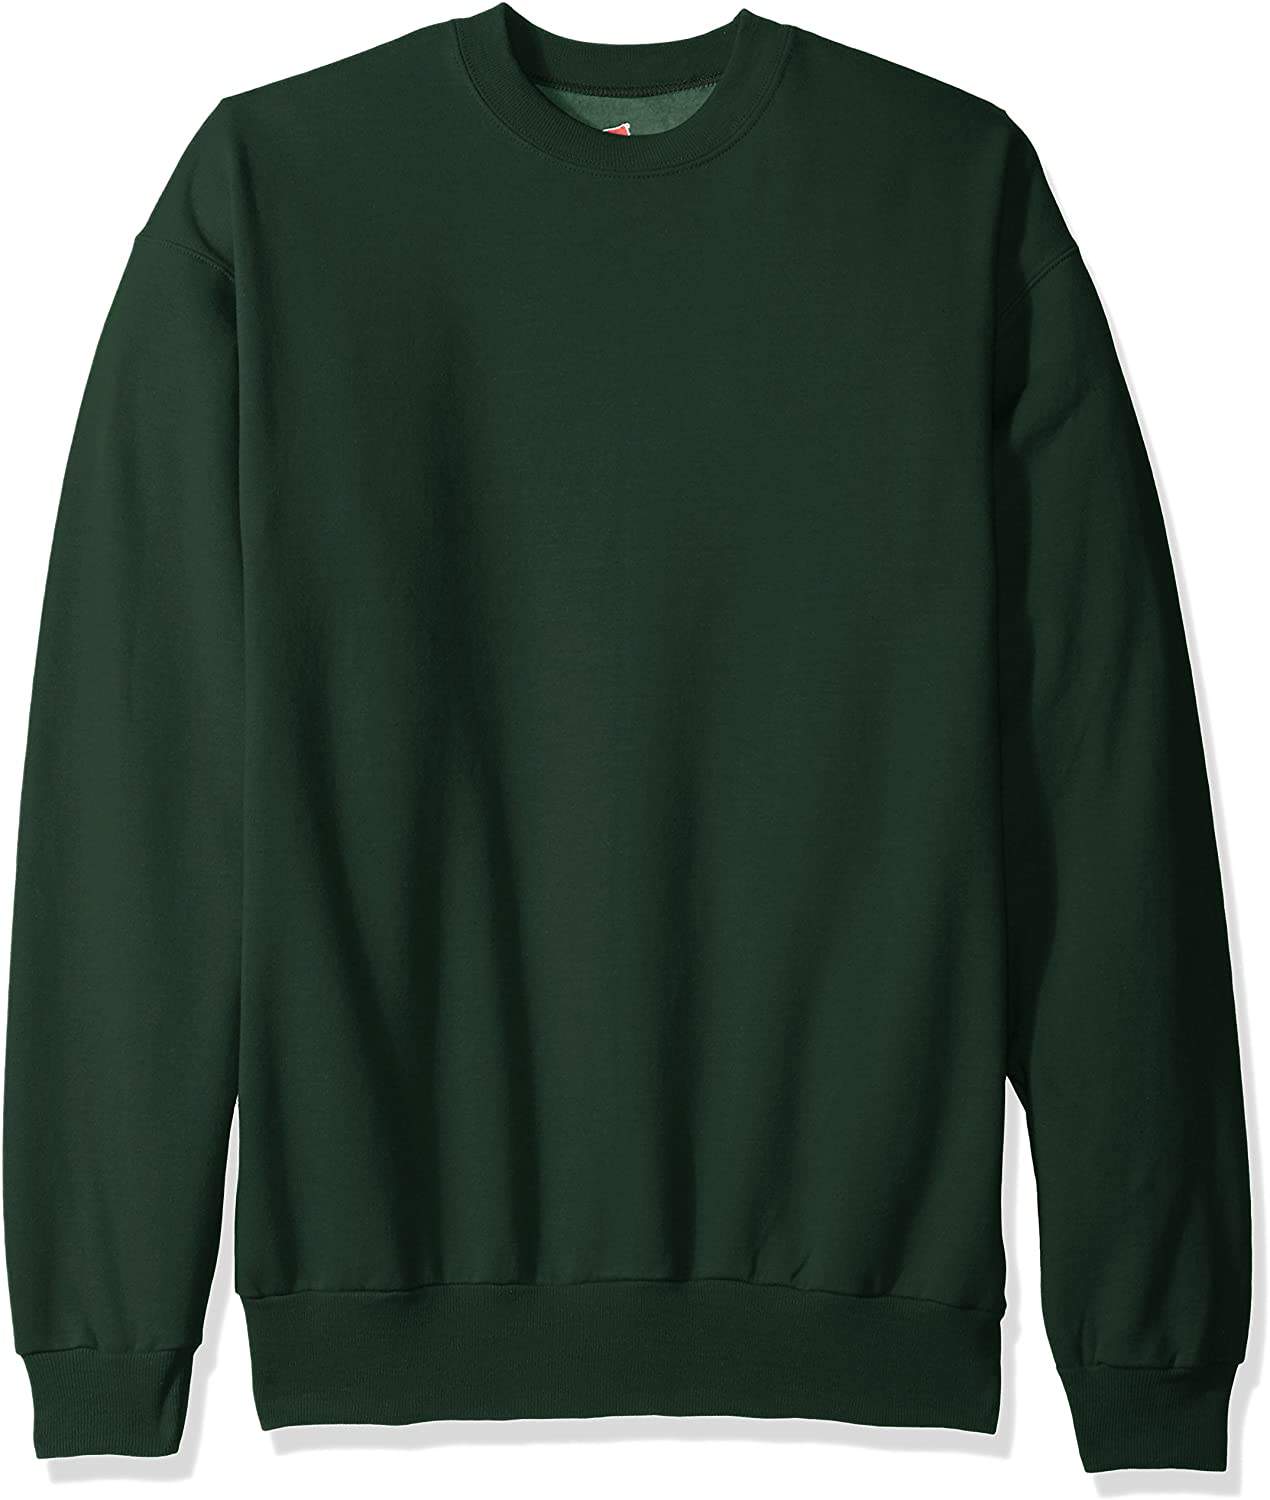 Fleece Sweatshirt is also a good gifts for teen boys